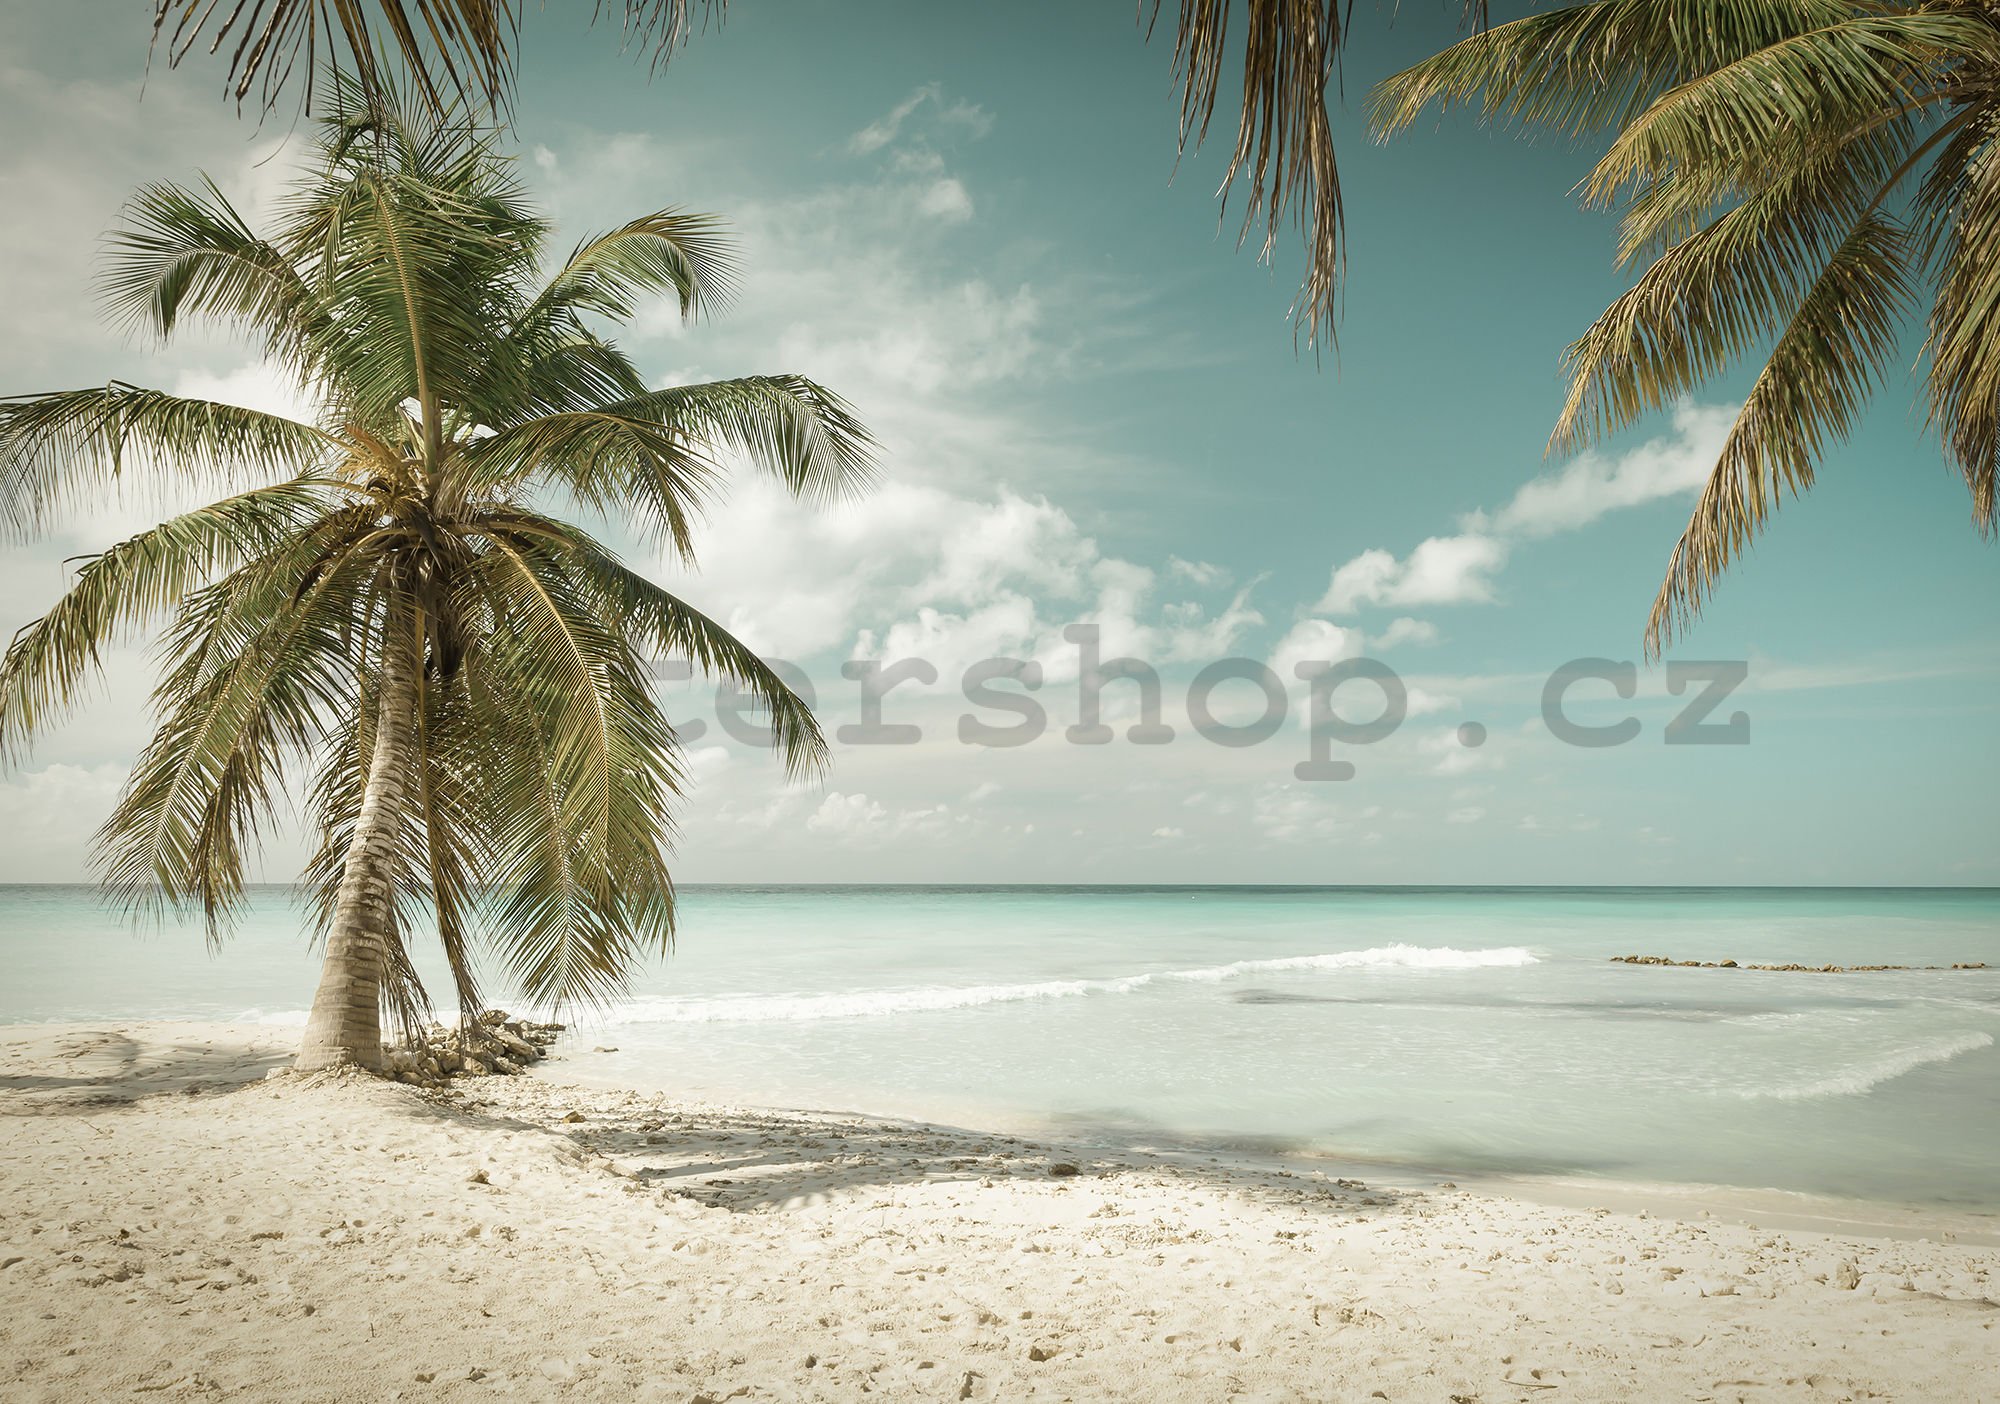 Fototapeta vliesová: Palmy nad mořem - 184x254 cm